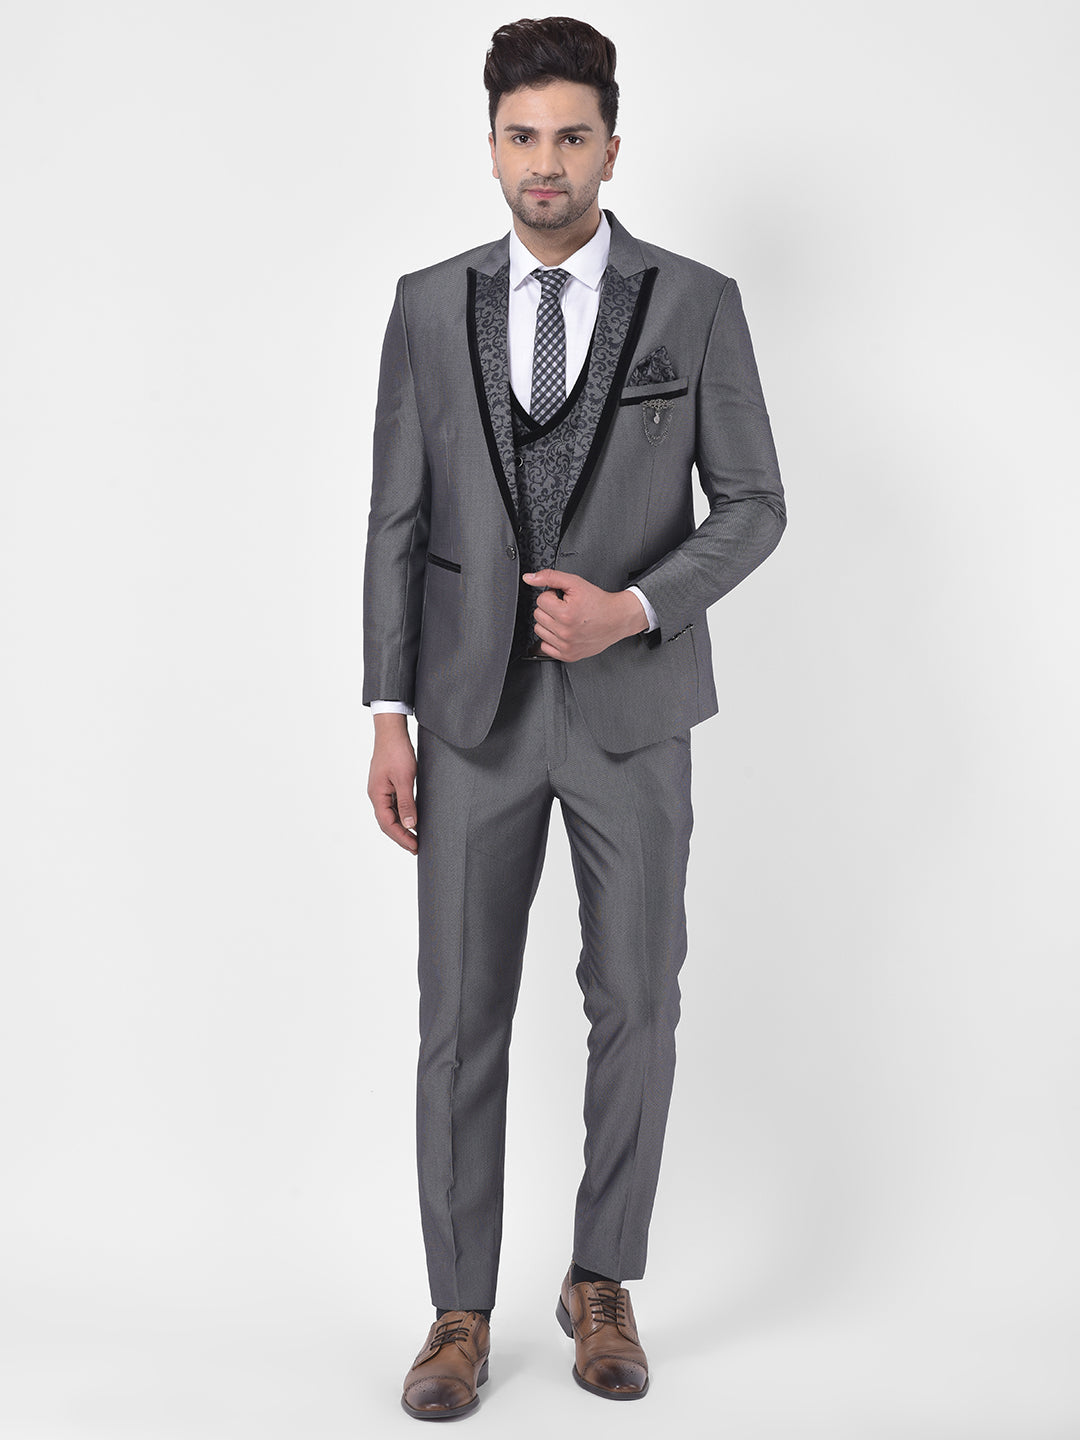 Indian New Design Men Suits 3 Piece Designer Tuxedo Black and Grey Style  Wedding Suit Elegant Suit Formal Fashion Suits Bespoke for Men - Etsy